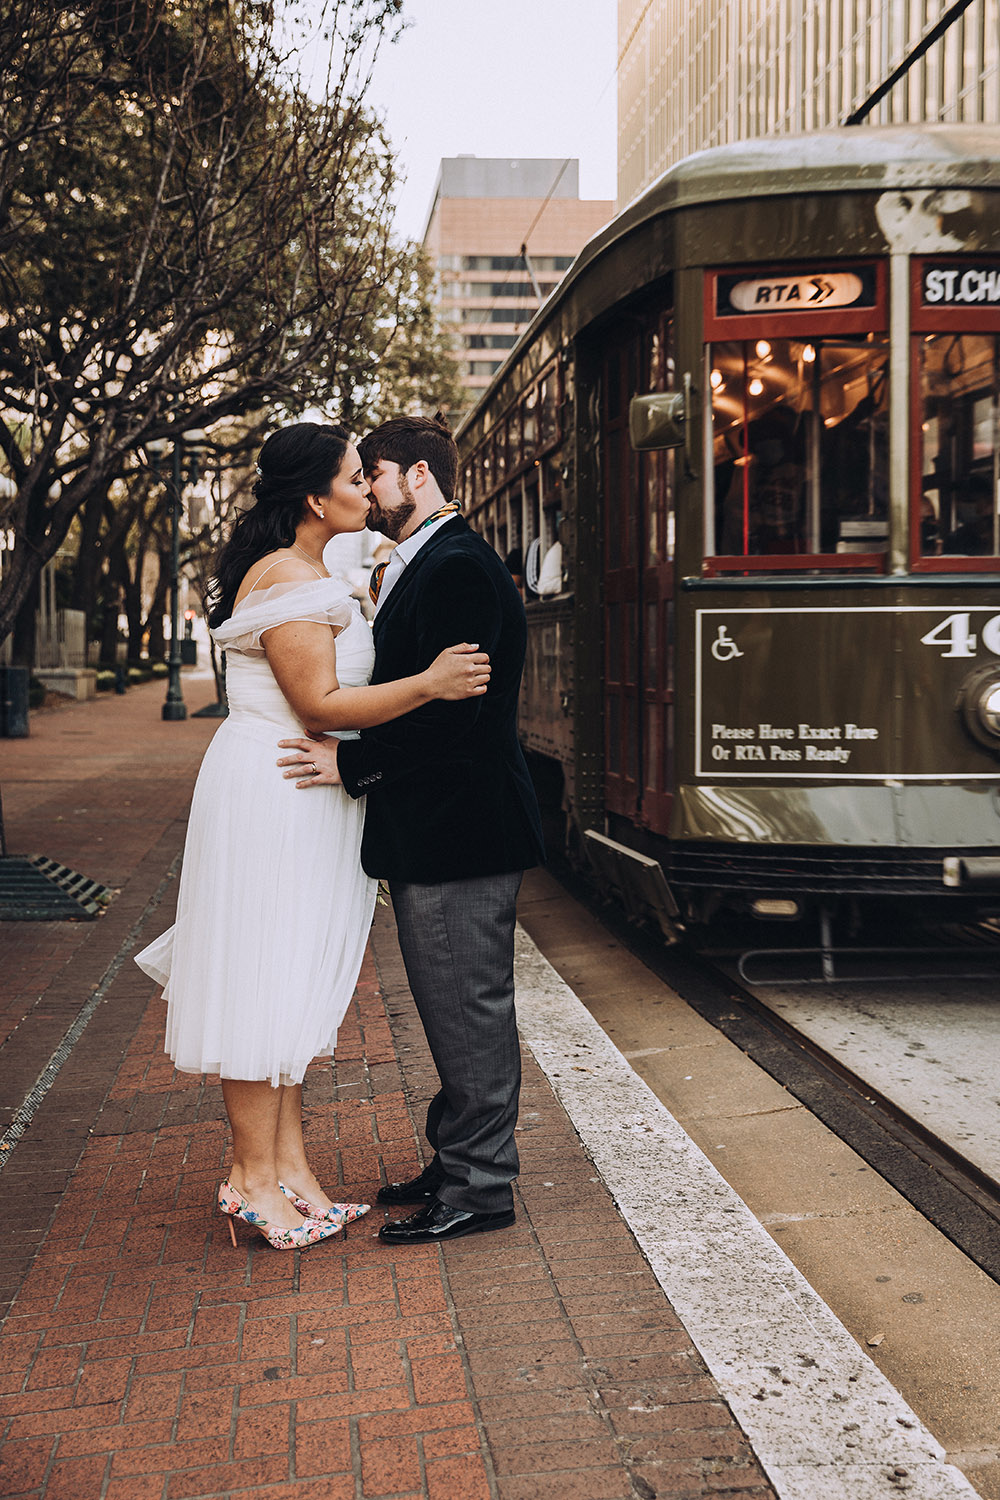 Isabella and Erik kiss as the St. Charles Streetcar passes.